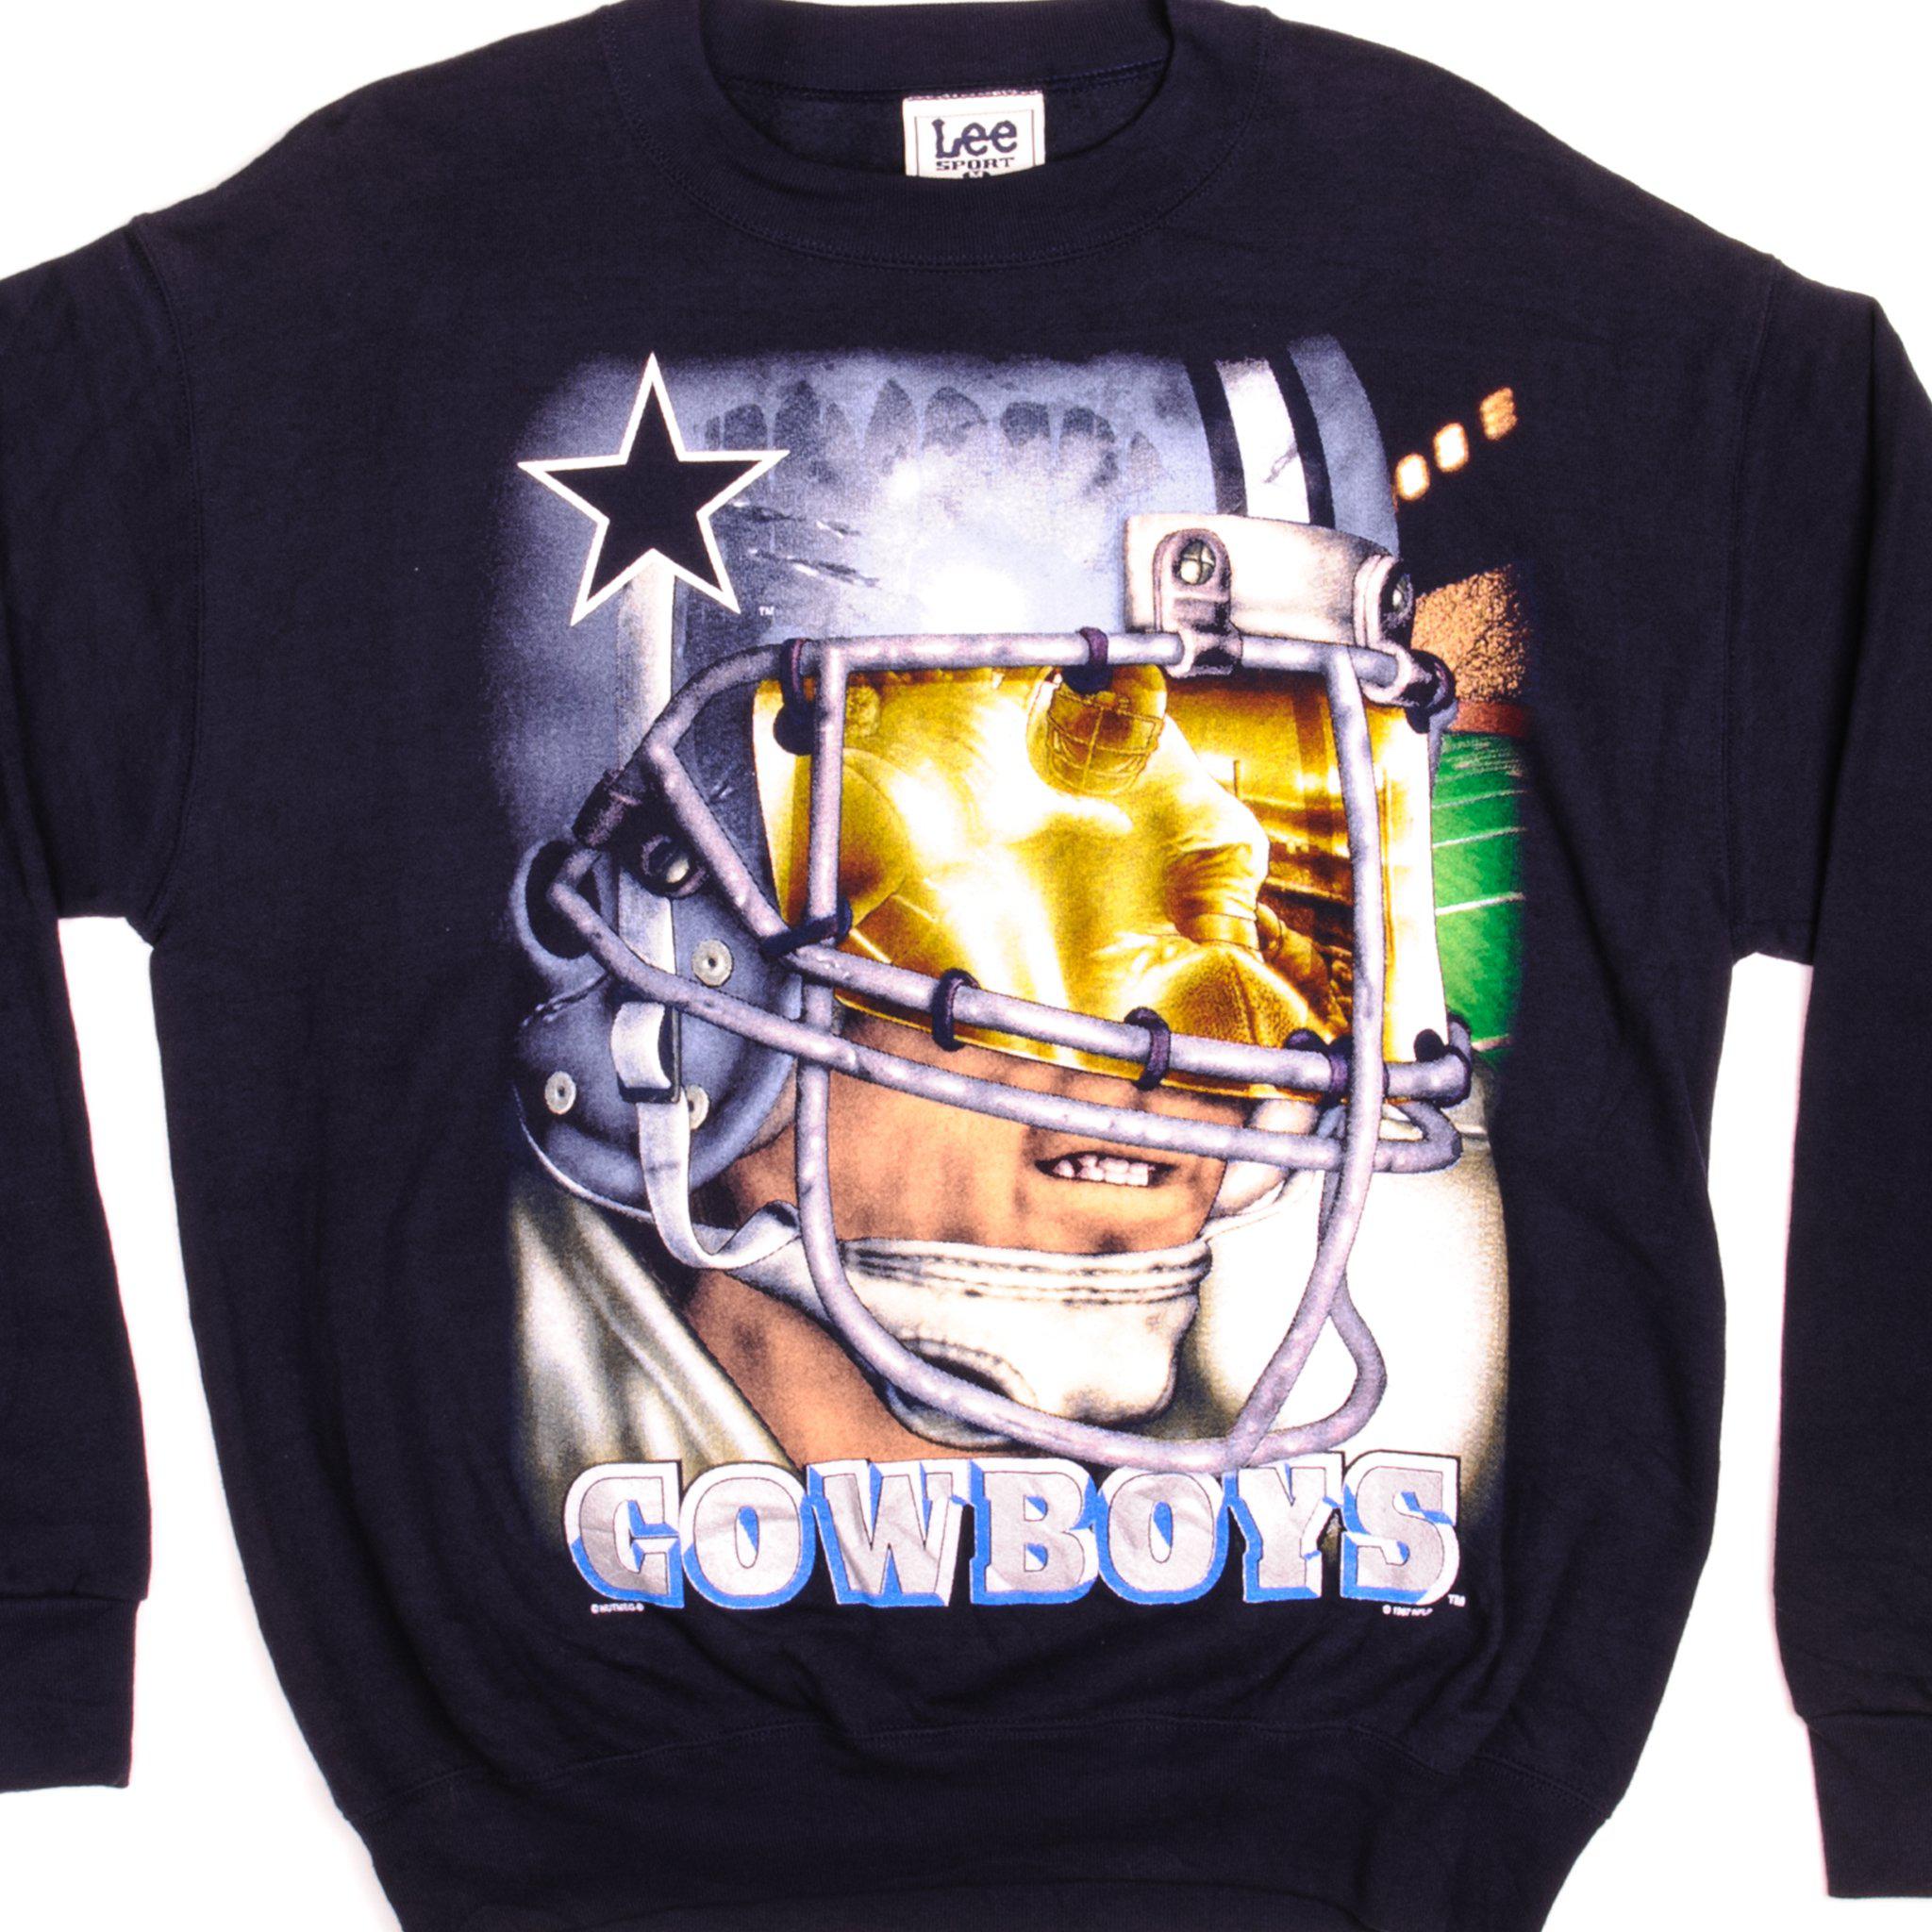 Vintage Dallas Football Sweatshirt, Dallas Cowboys Shirt, NFL